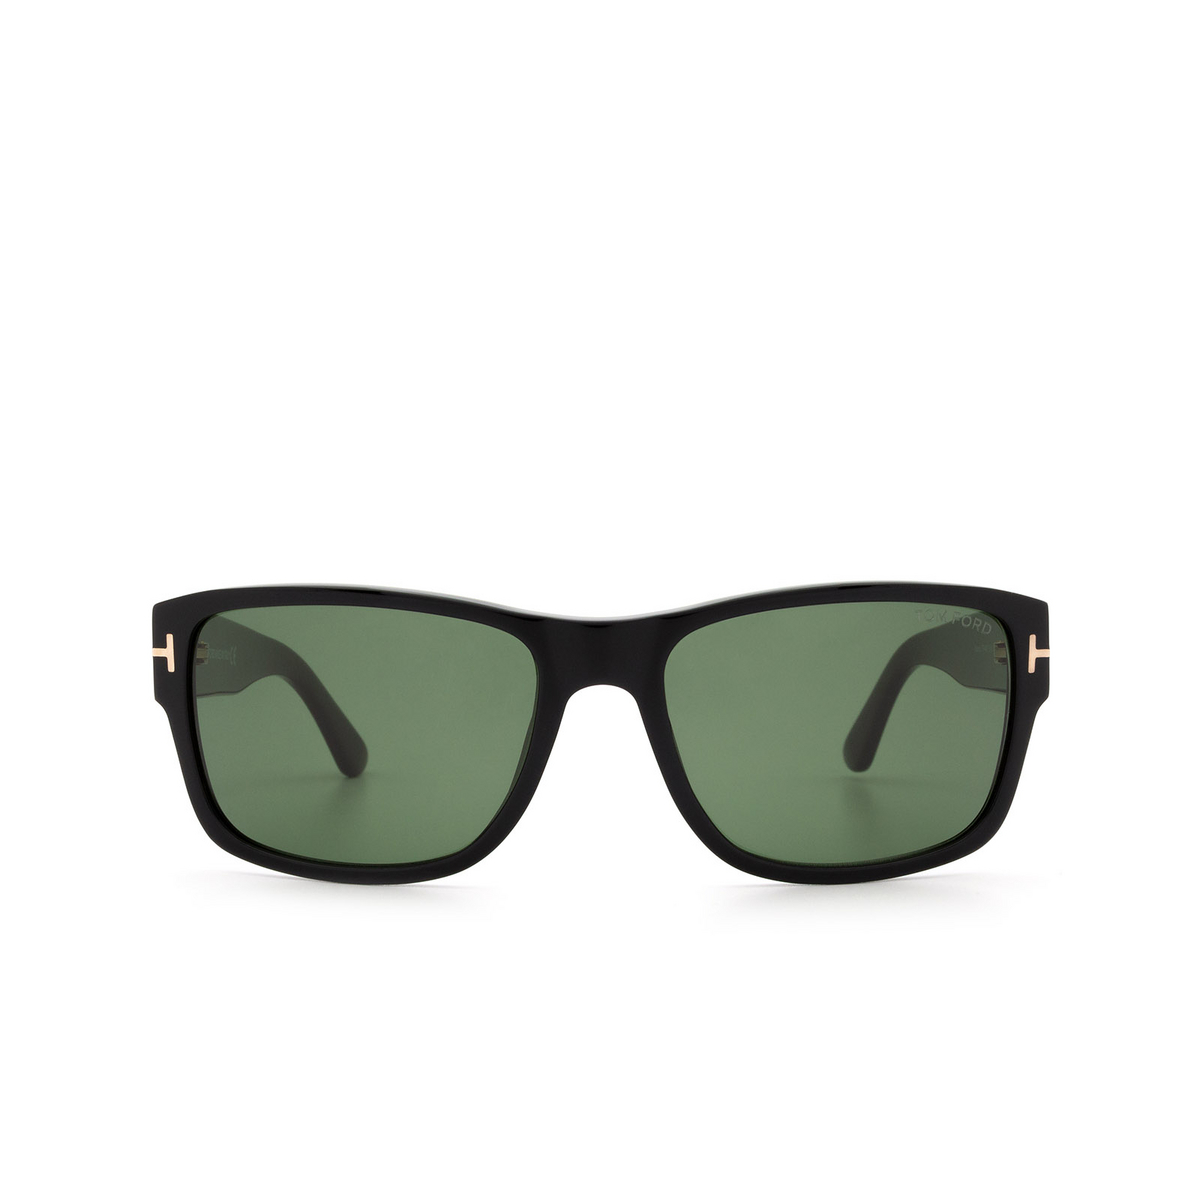 Tom Ford MASON Sunglasses 01N Black - front view